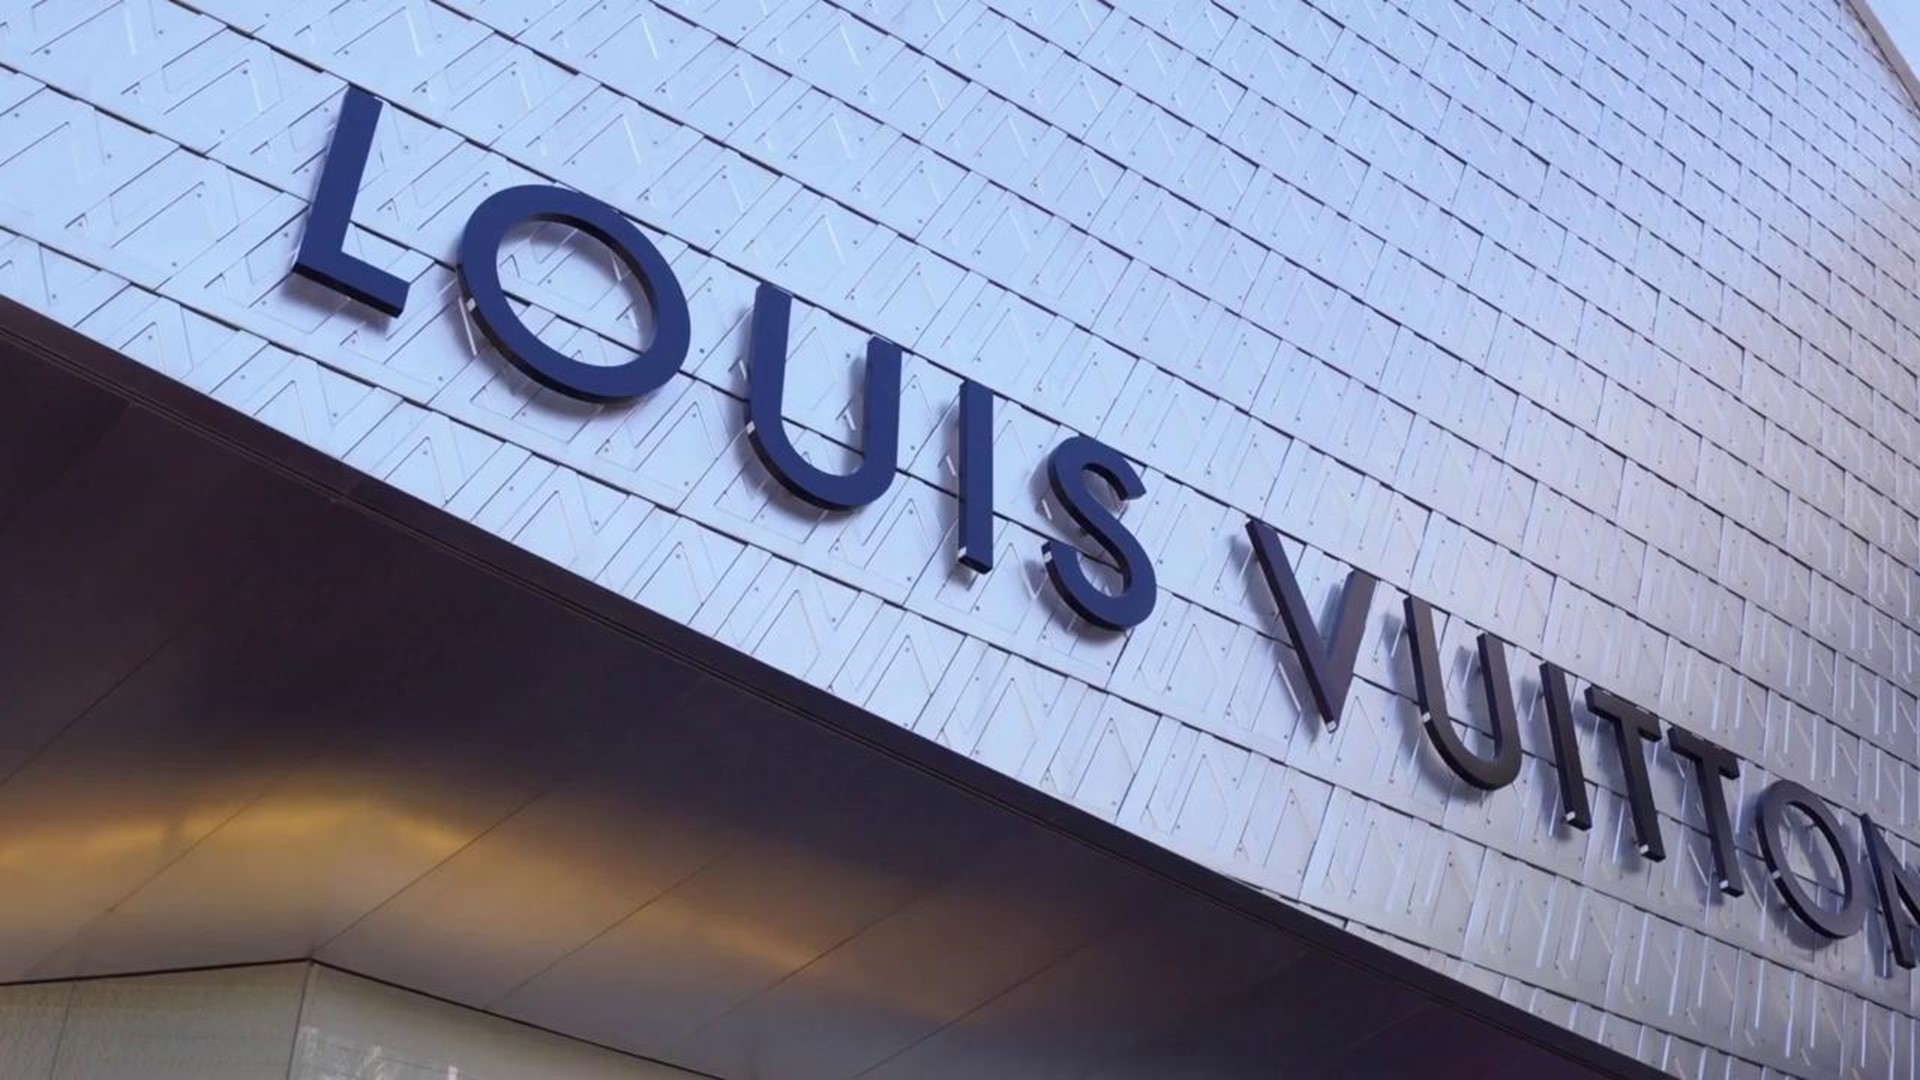 Louis Vuitton Portland Oregon